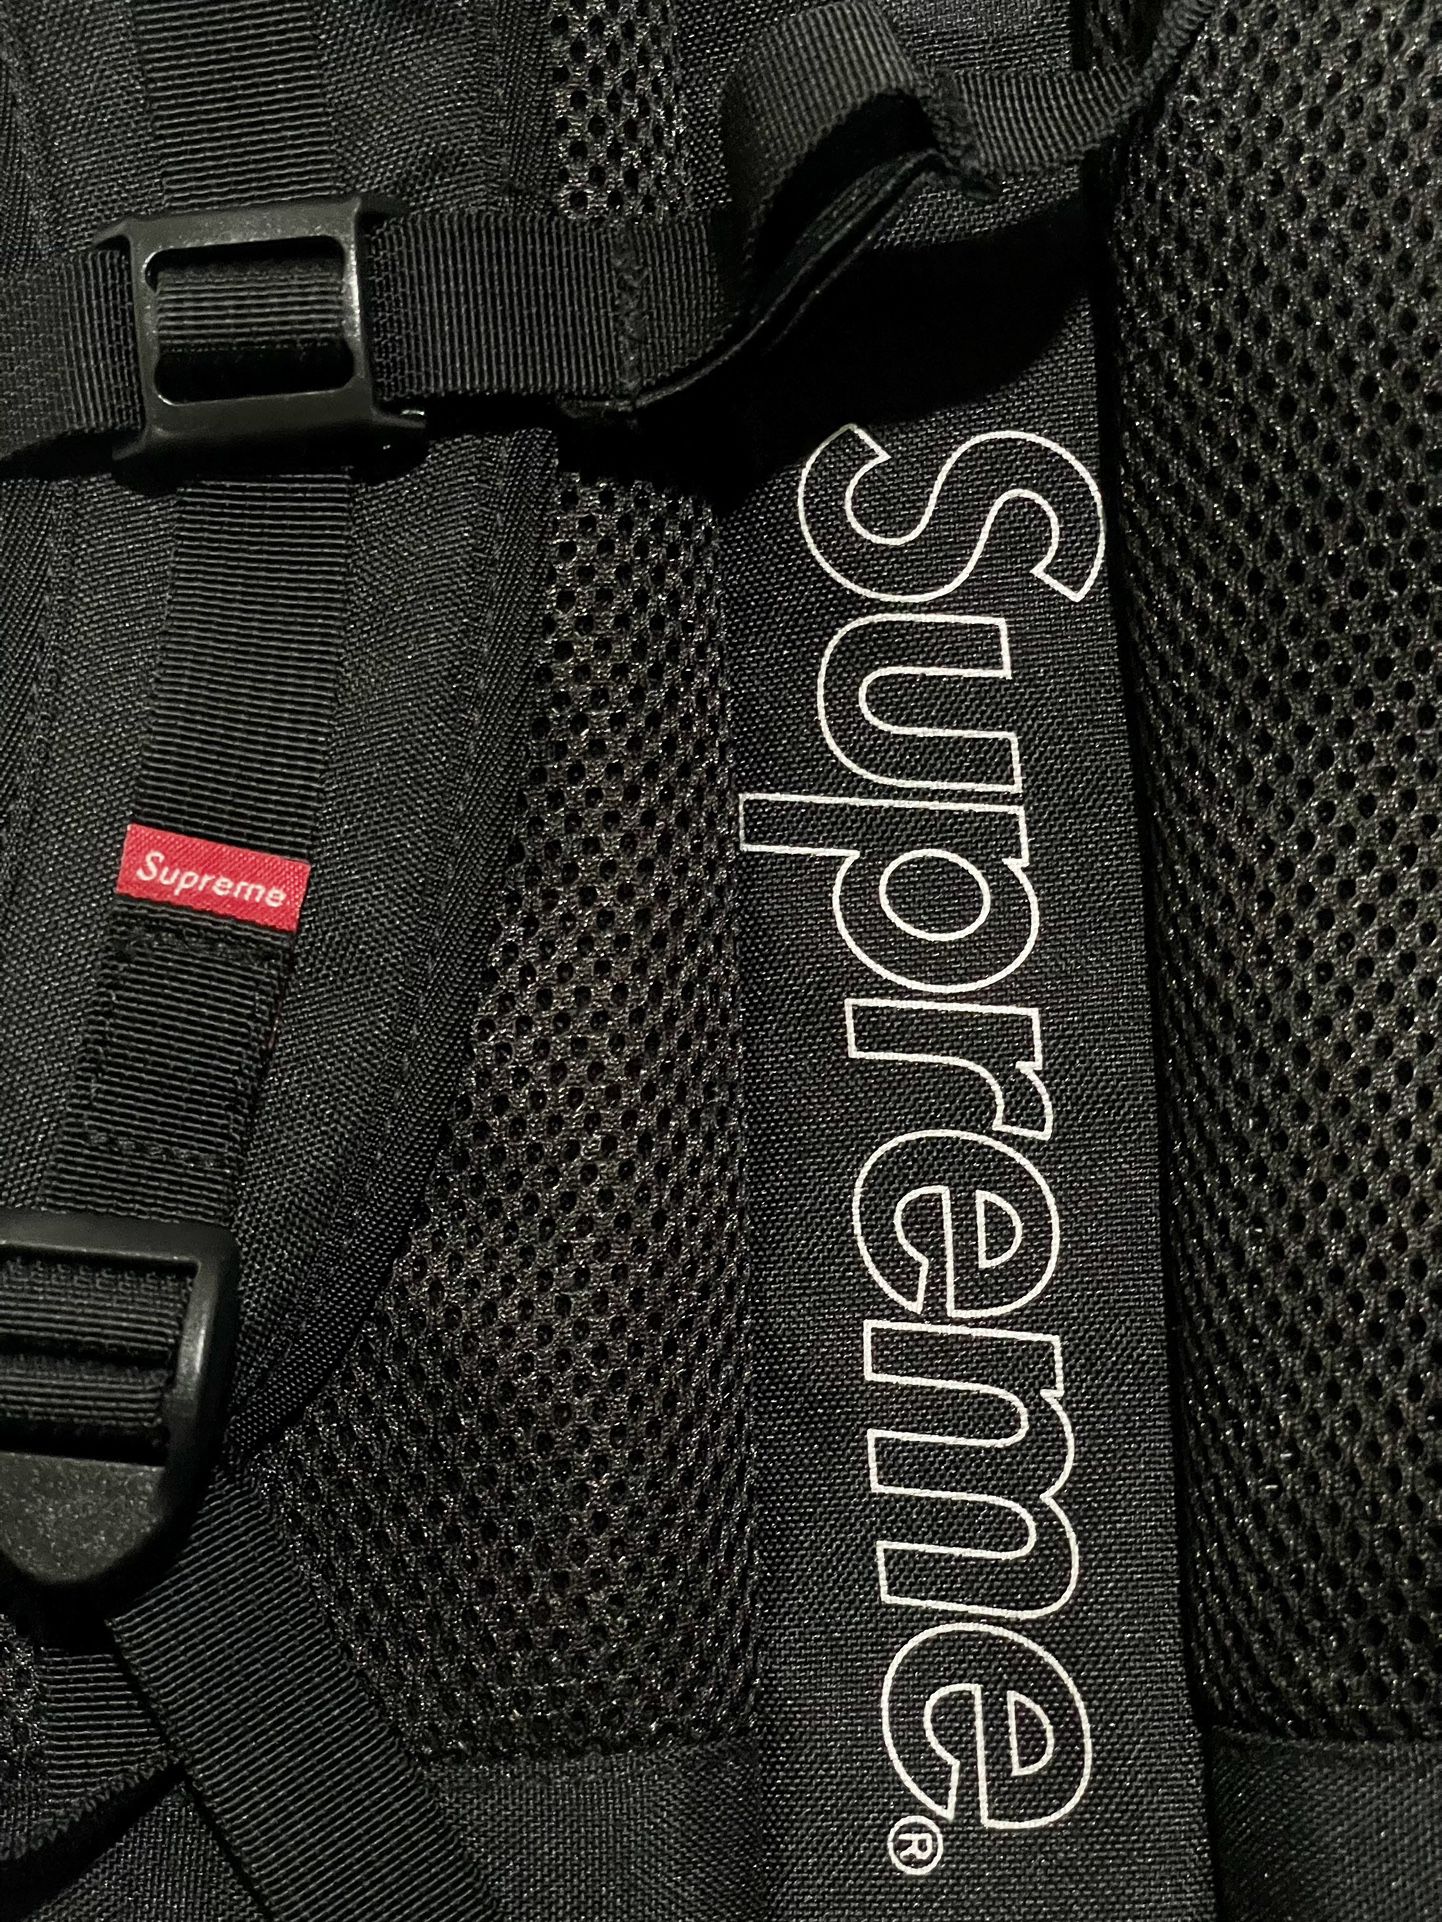 Supreme Backpack – LUHO